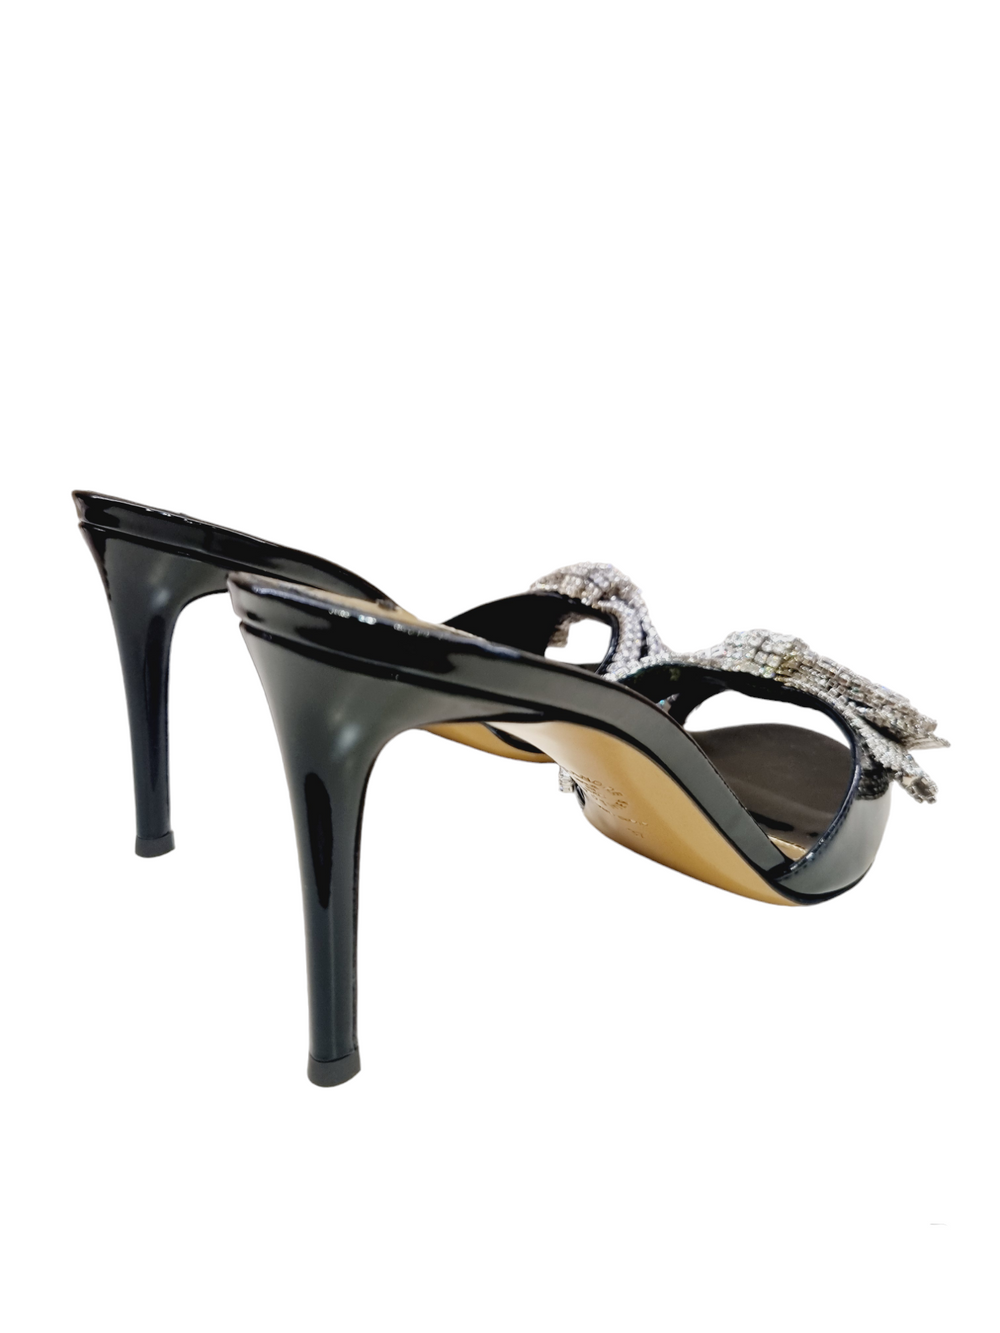 Mandy Black Crystal Embellished Mules - Alexandre Vauthier - Liberty Shoes Australia